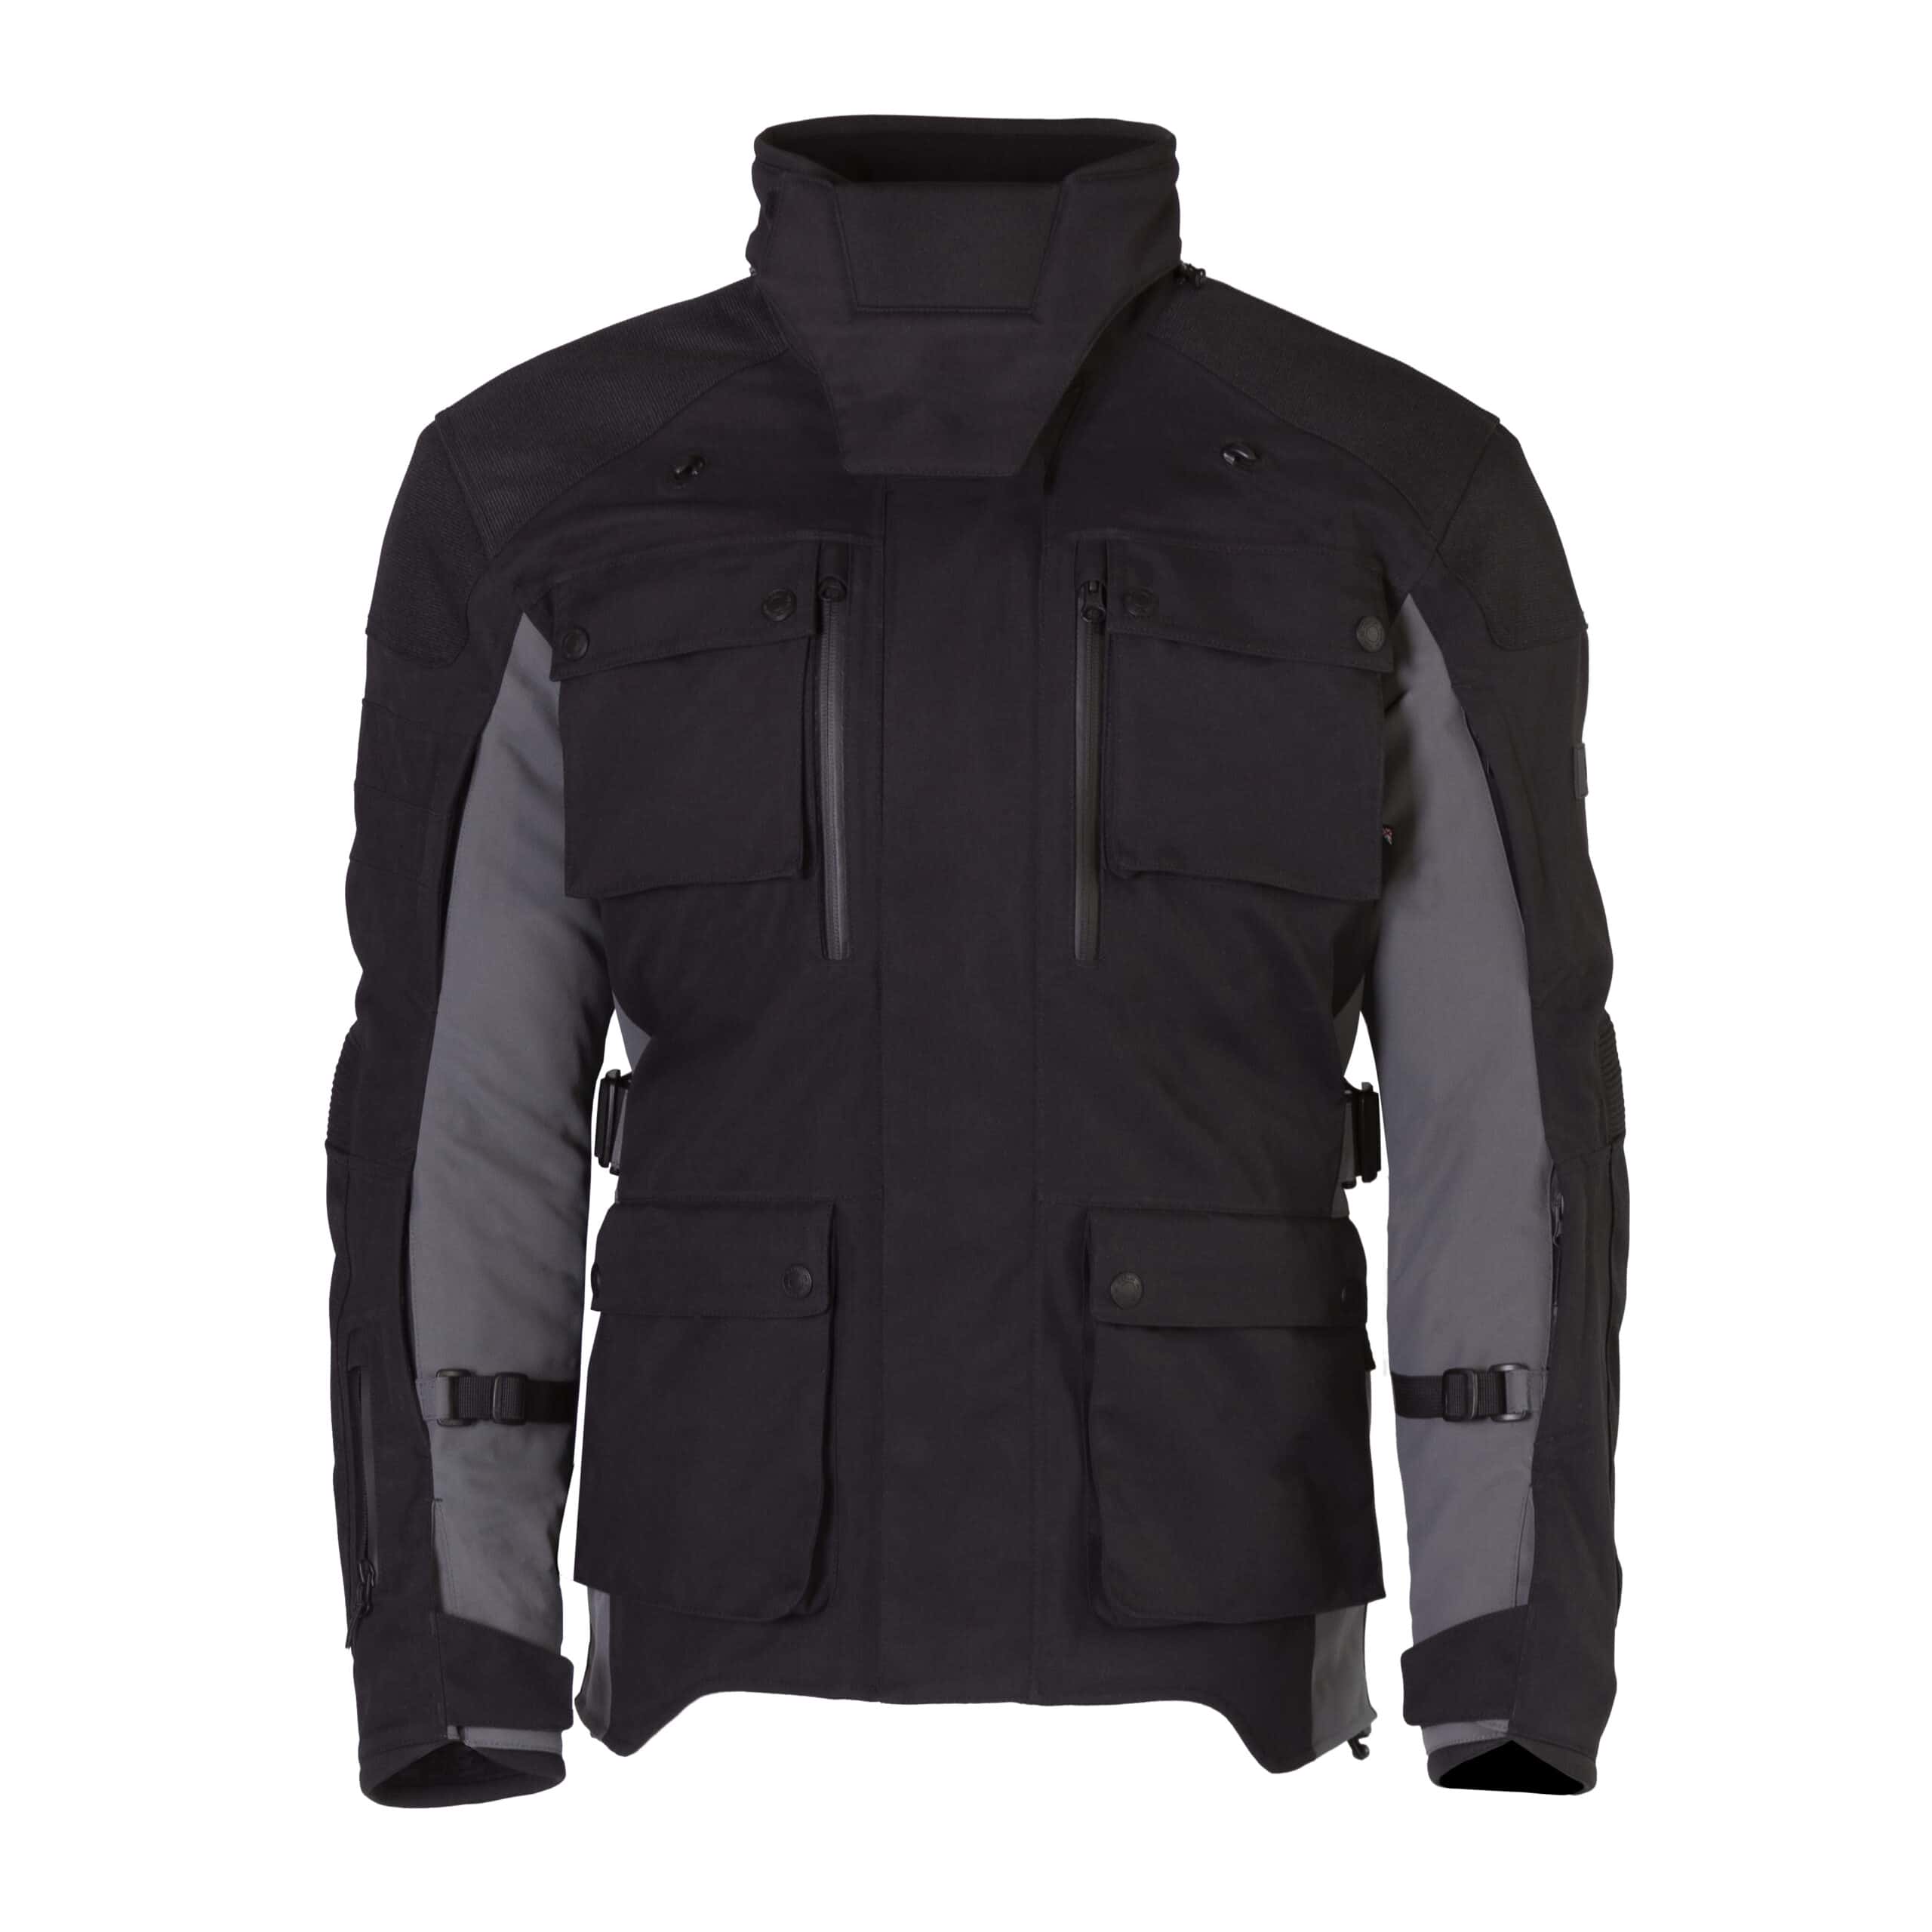 Merlin Solitude jacket in black grey